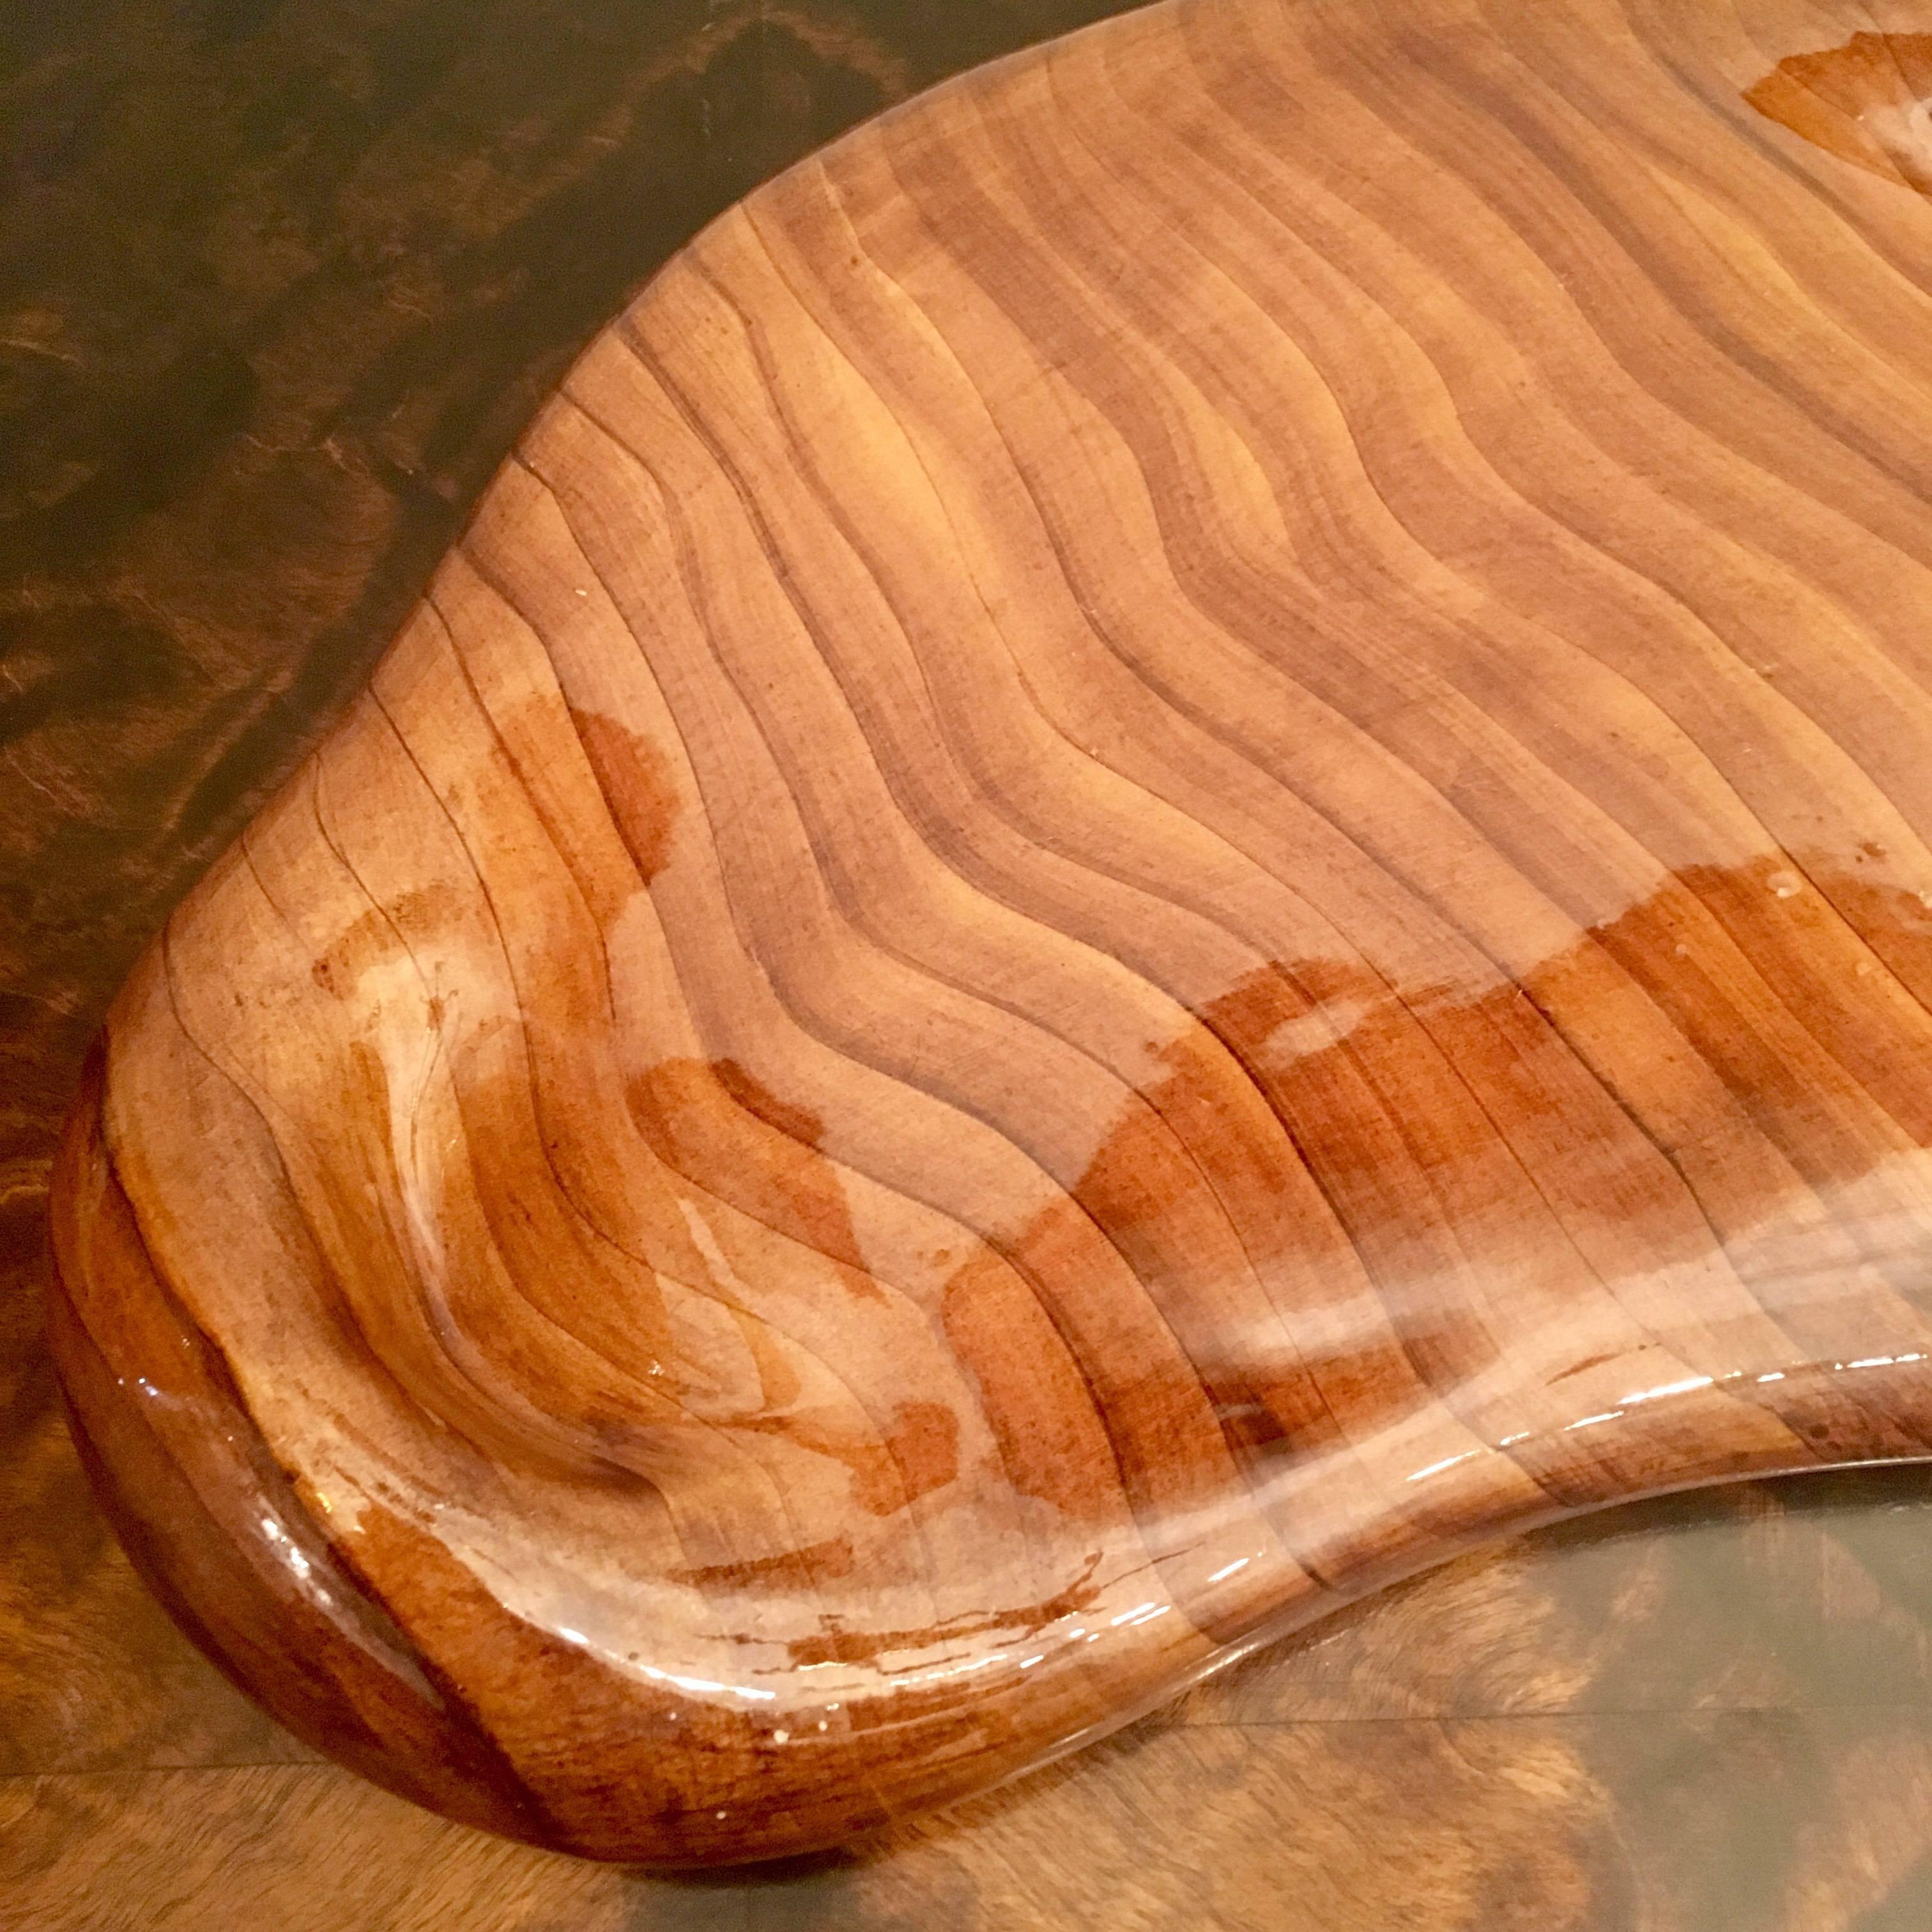 A wonderful ceramic tray made to mimic wood by French Velarius artist, Granjean Jordan.